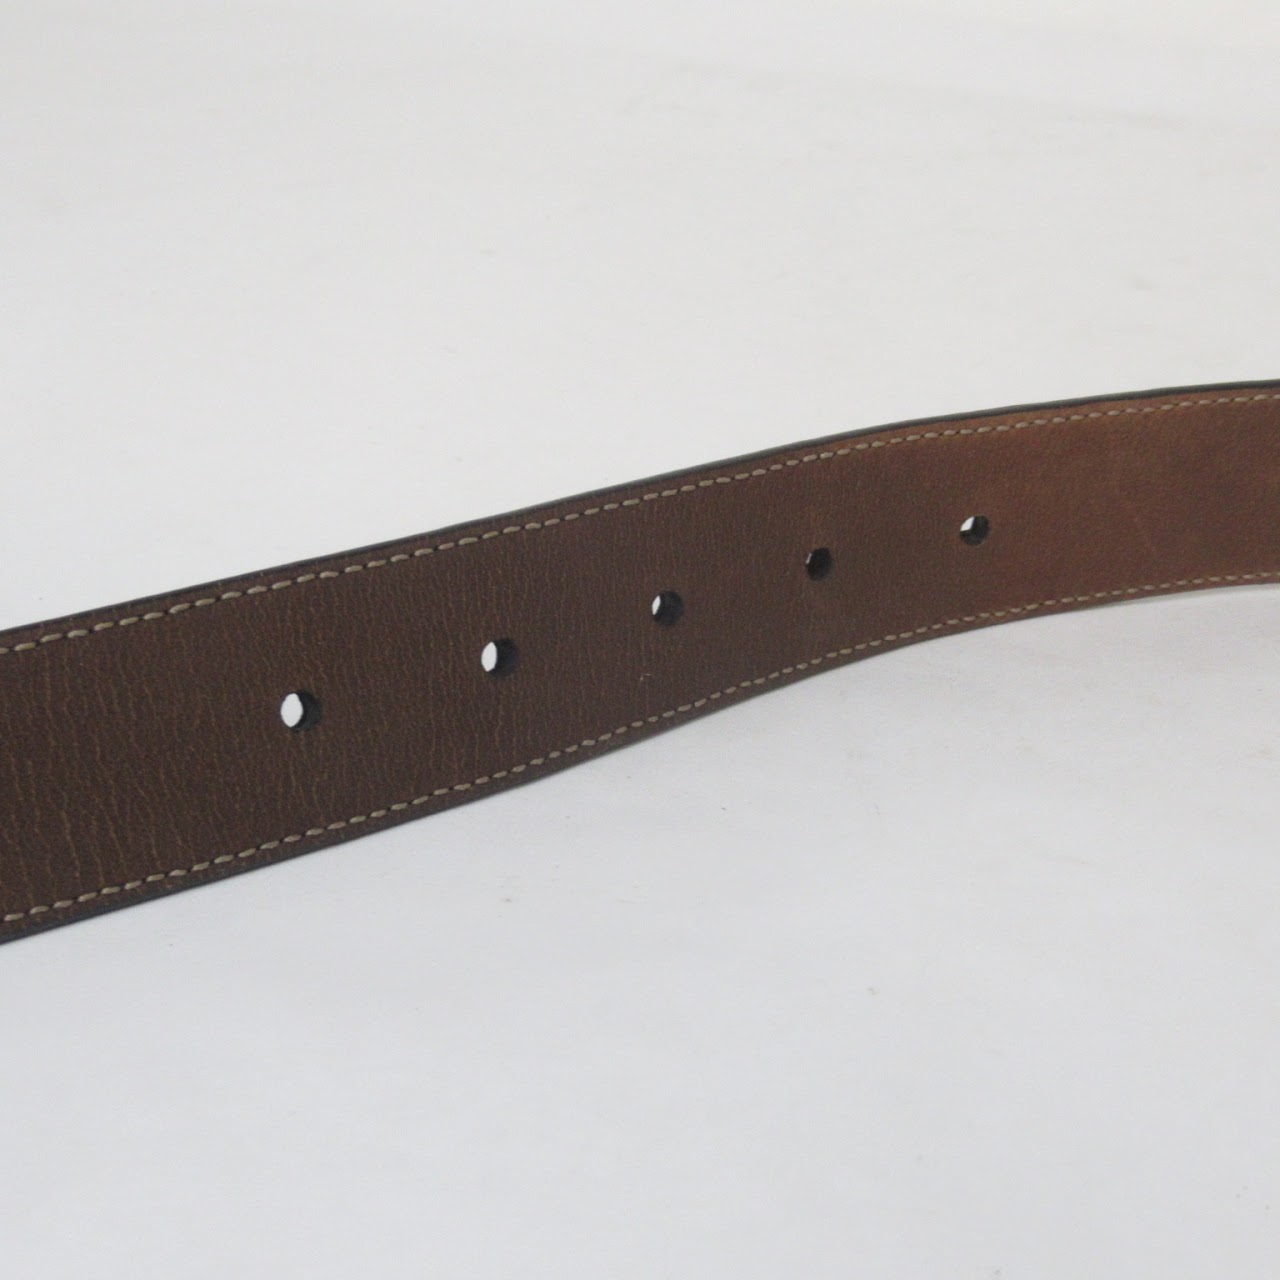 Gucci Patent Leather Belt